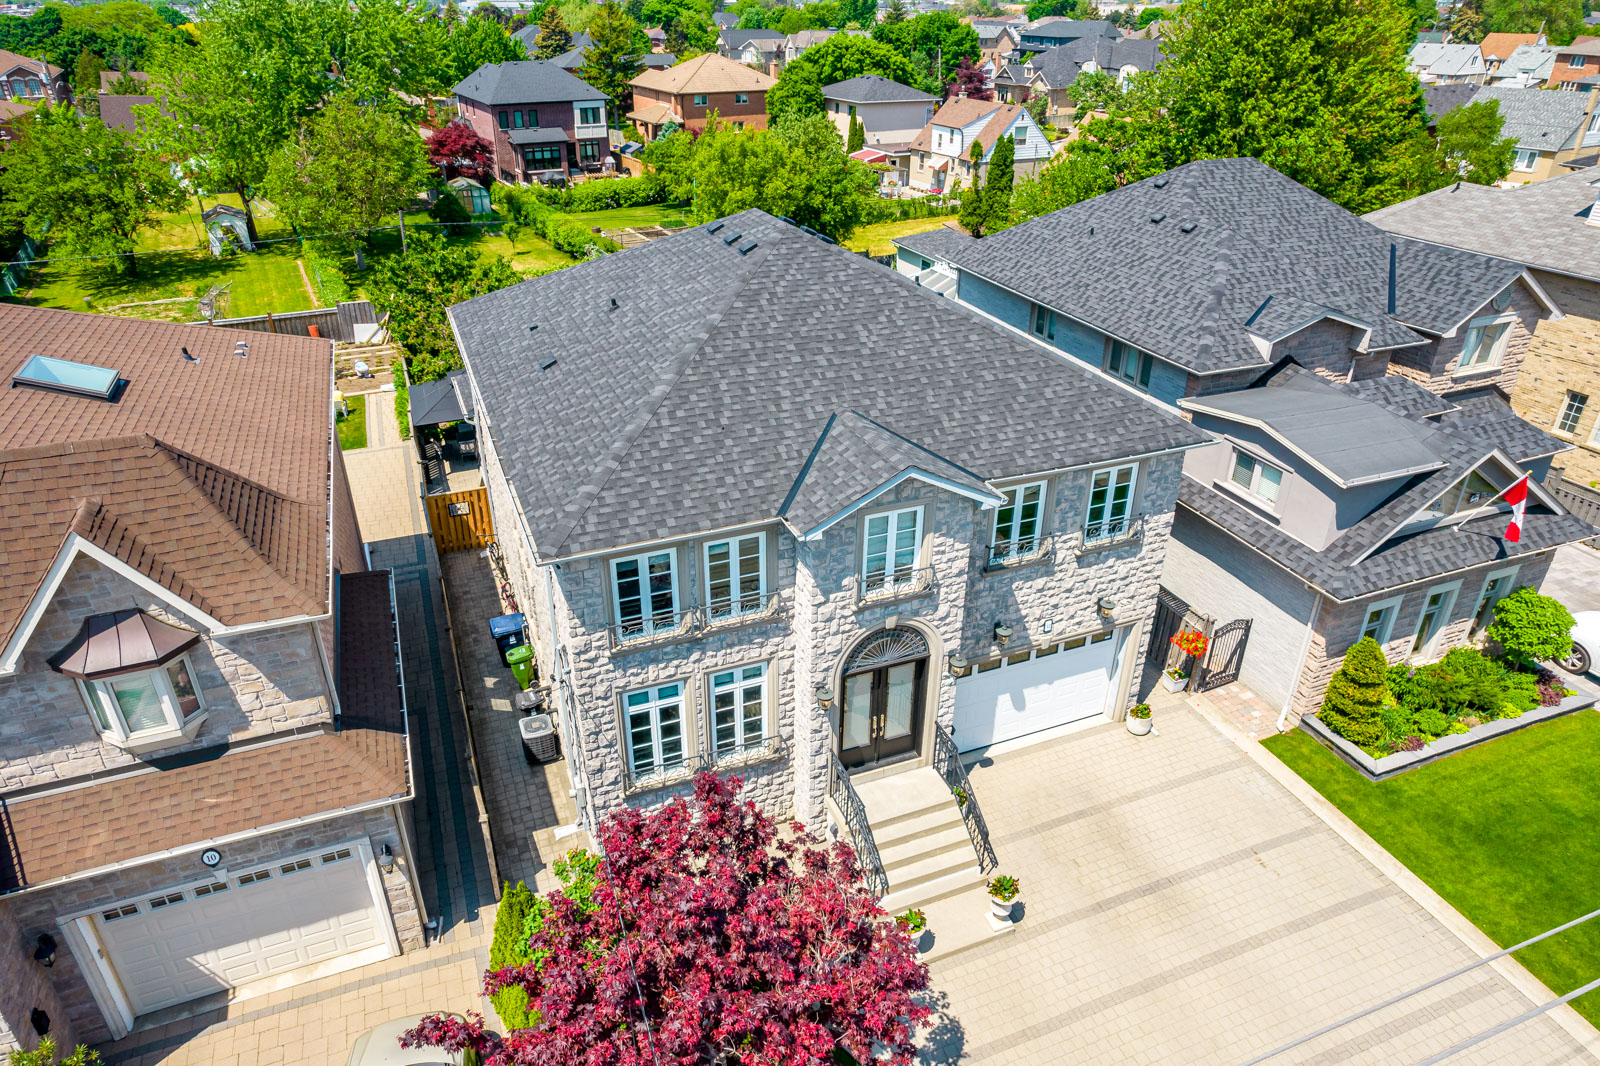 Ariel drone photo of houses in Torontosuburb.